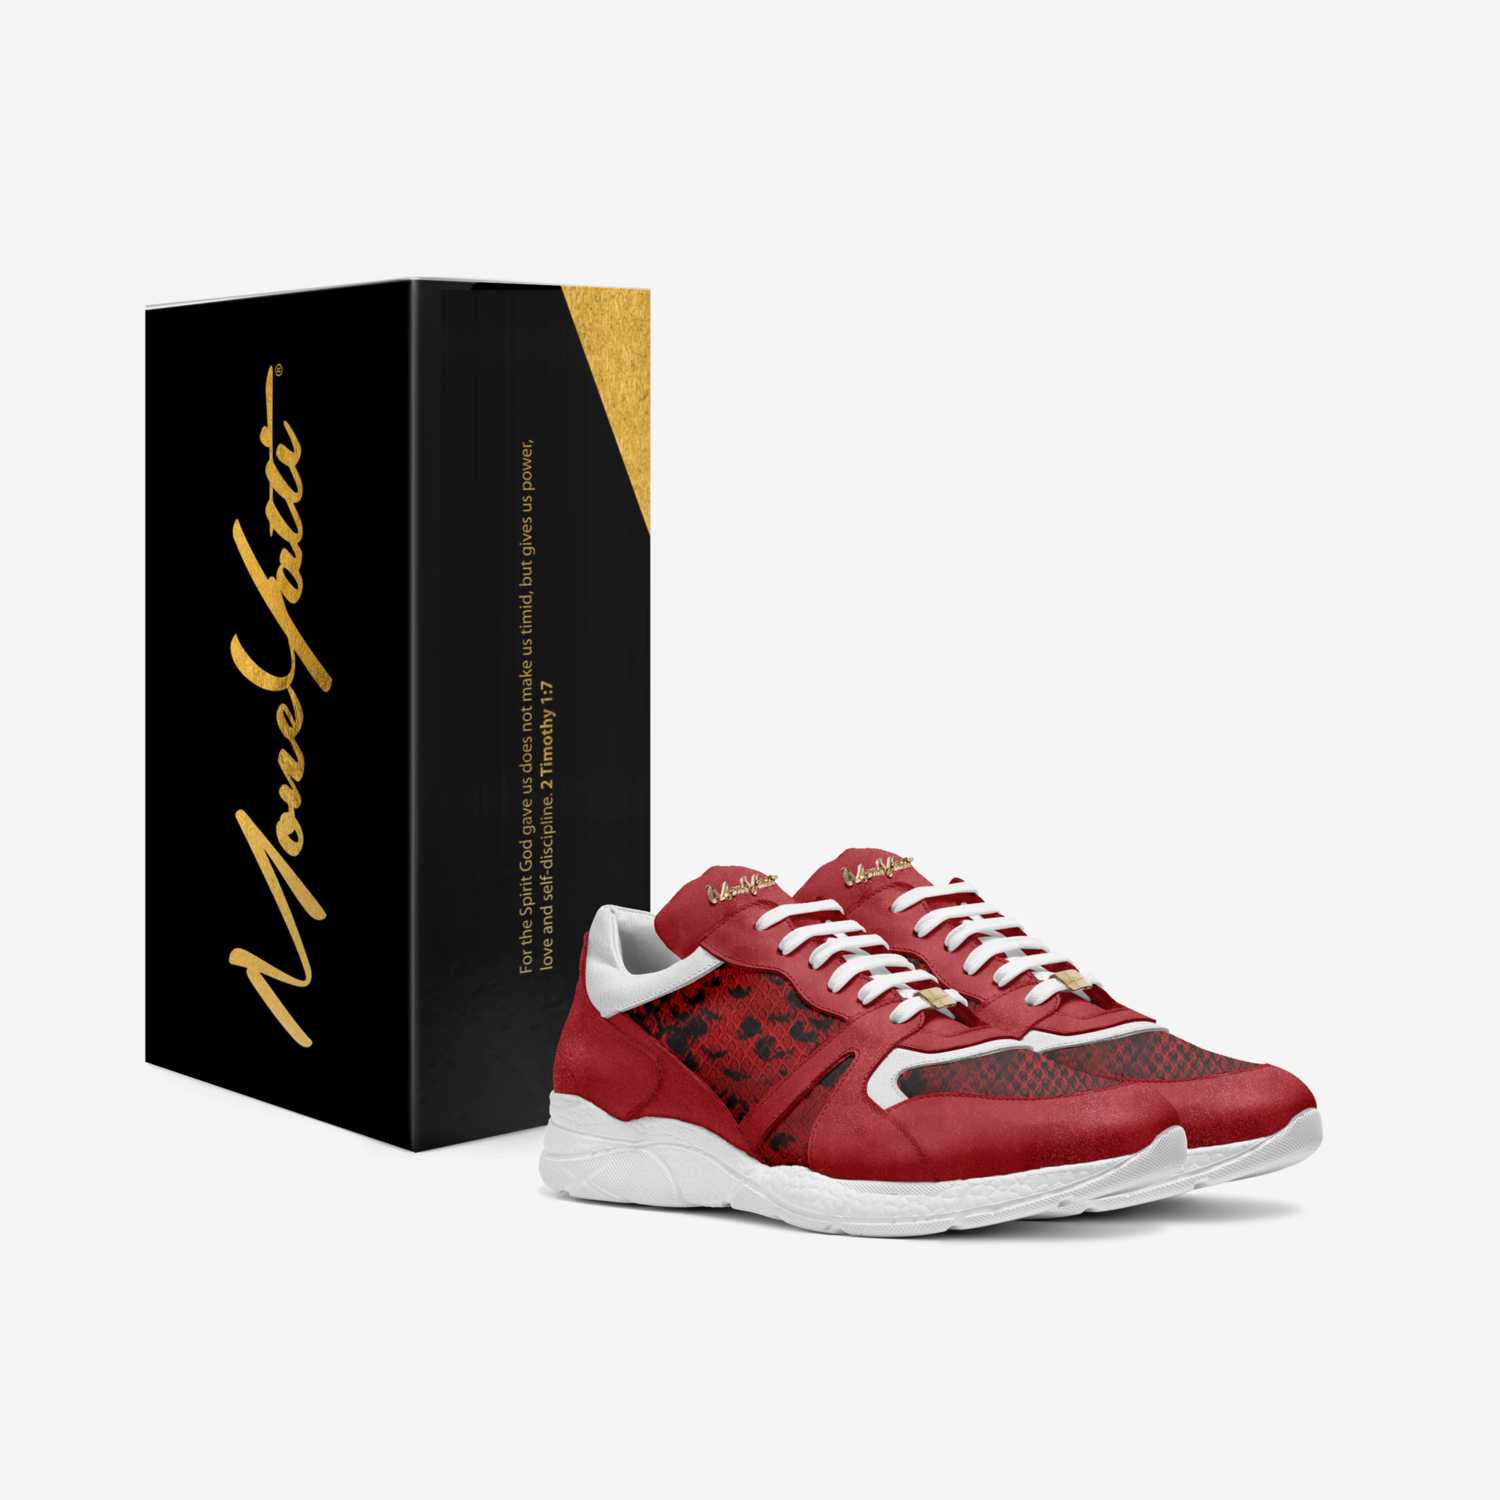 Moneyatti Nem Red Velvet custom made in Italy shoes by Moneyatti Brand | Box view